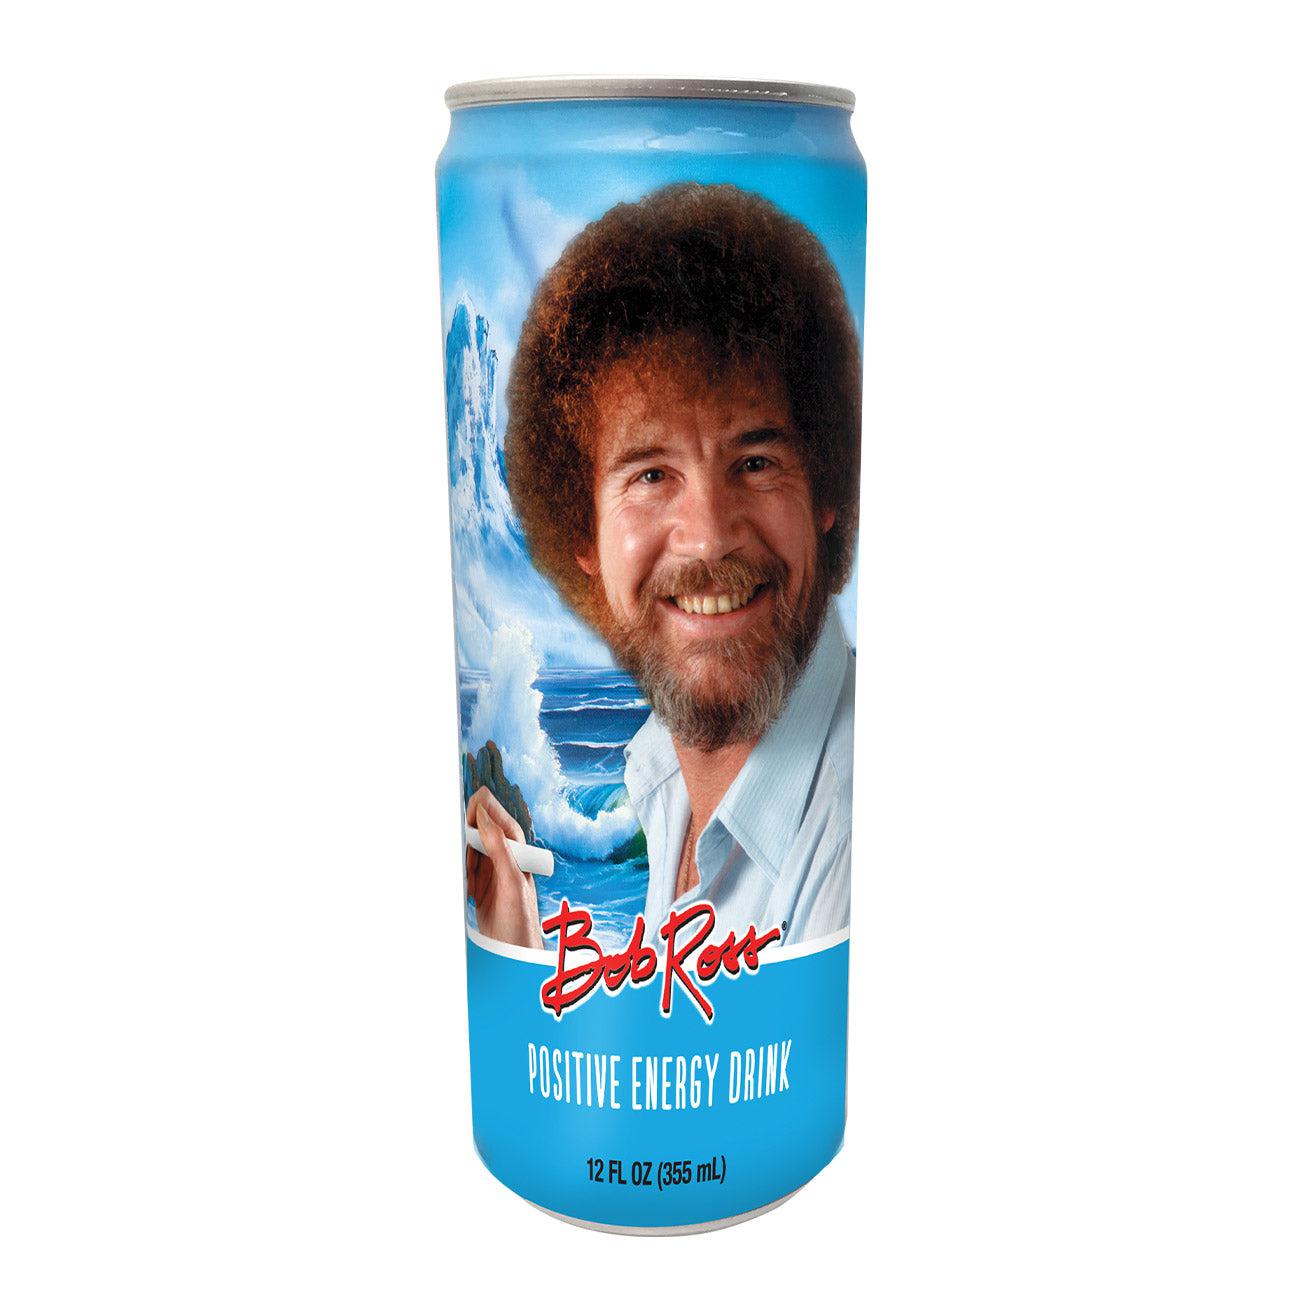 Bob Ross 12oz Positive Energy Drink, 1 Can